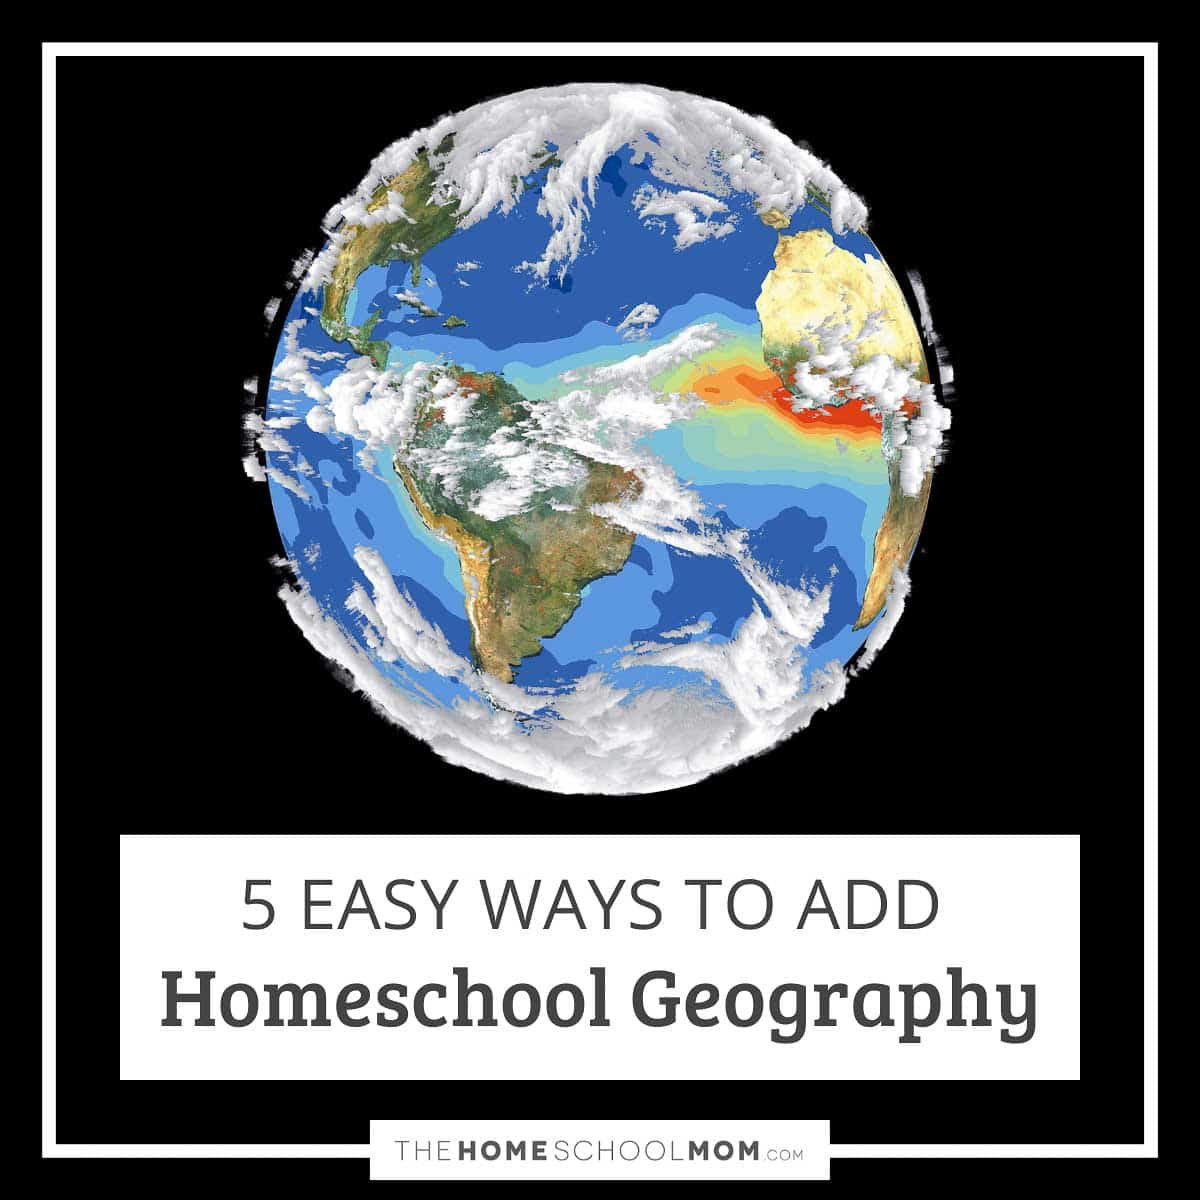 5 easy ways to add homeschool geography.